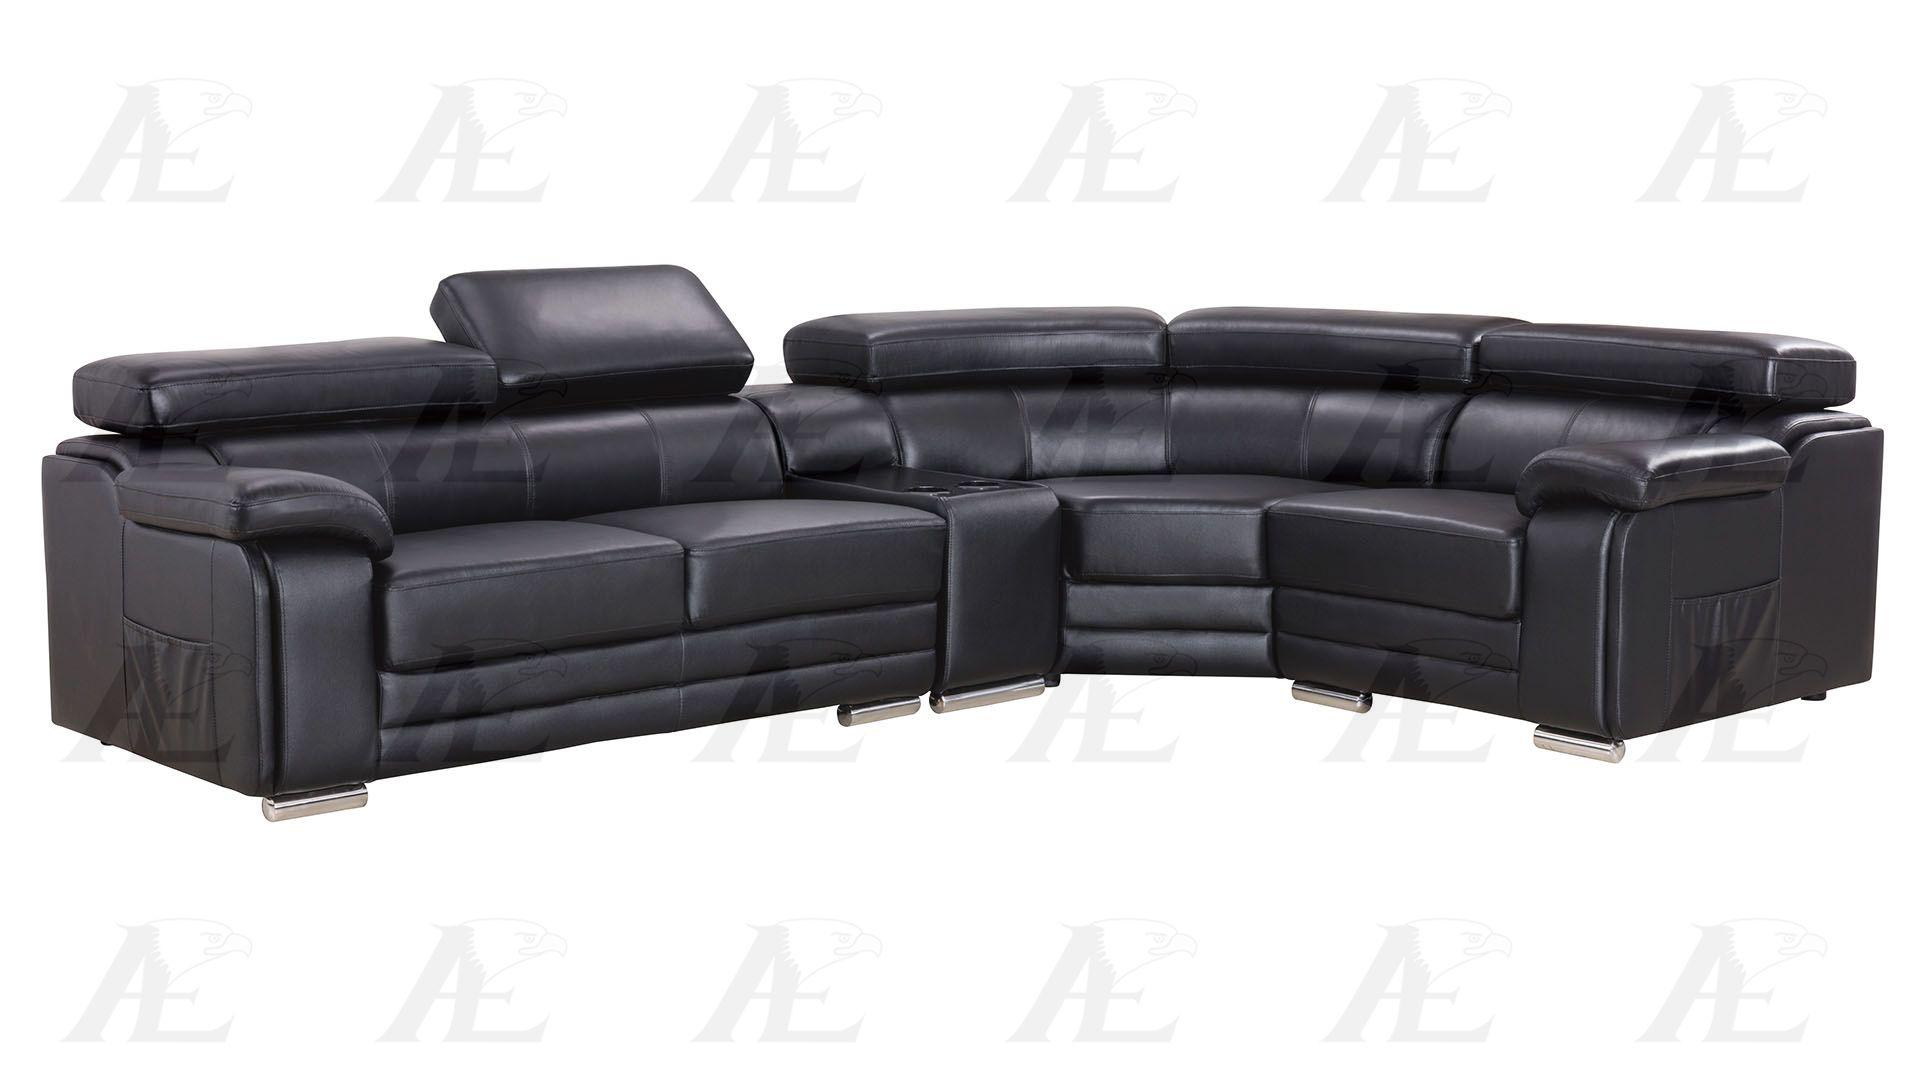 

    
EK-L516L-BK American Eagle Furniture Sectional Sofa
